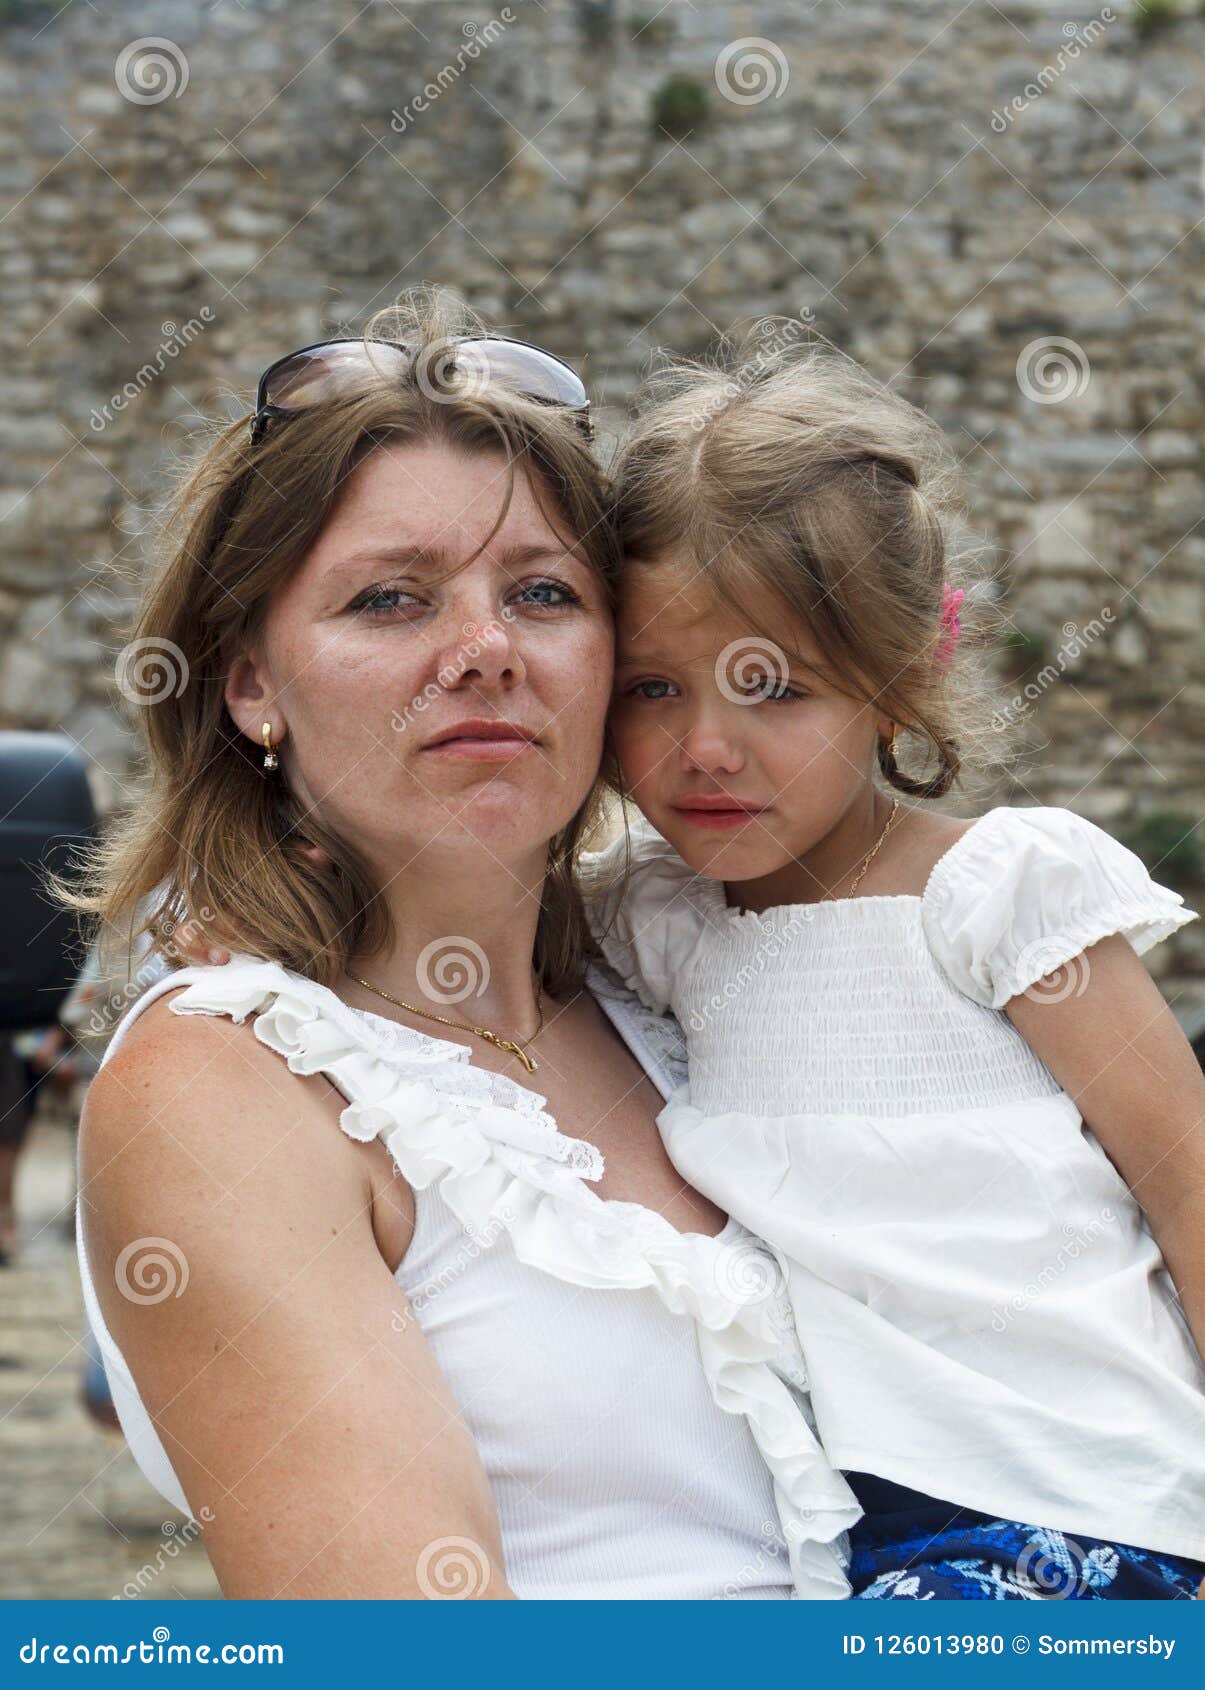 Strict Mother Scolding Upset Little Daughter For Bad Marks Stock Image